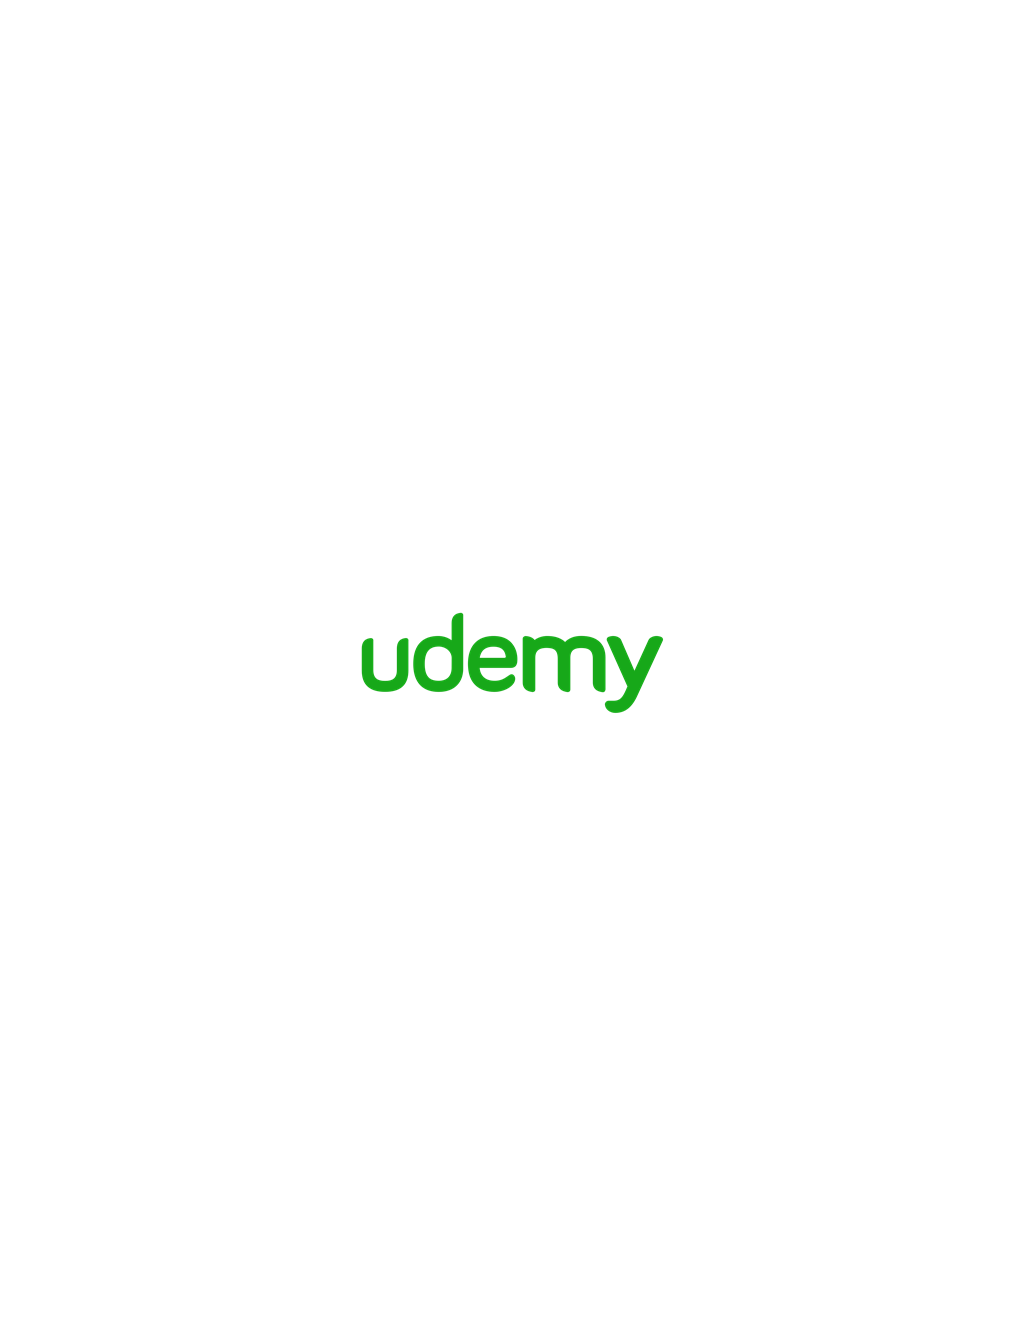 Udemy logotype, transparent .png, medium, large